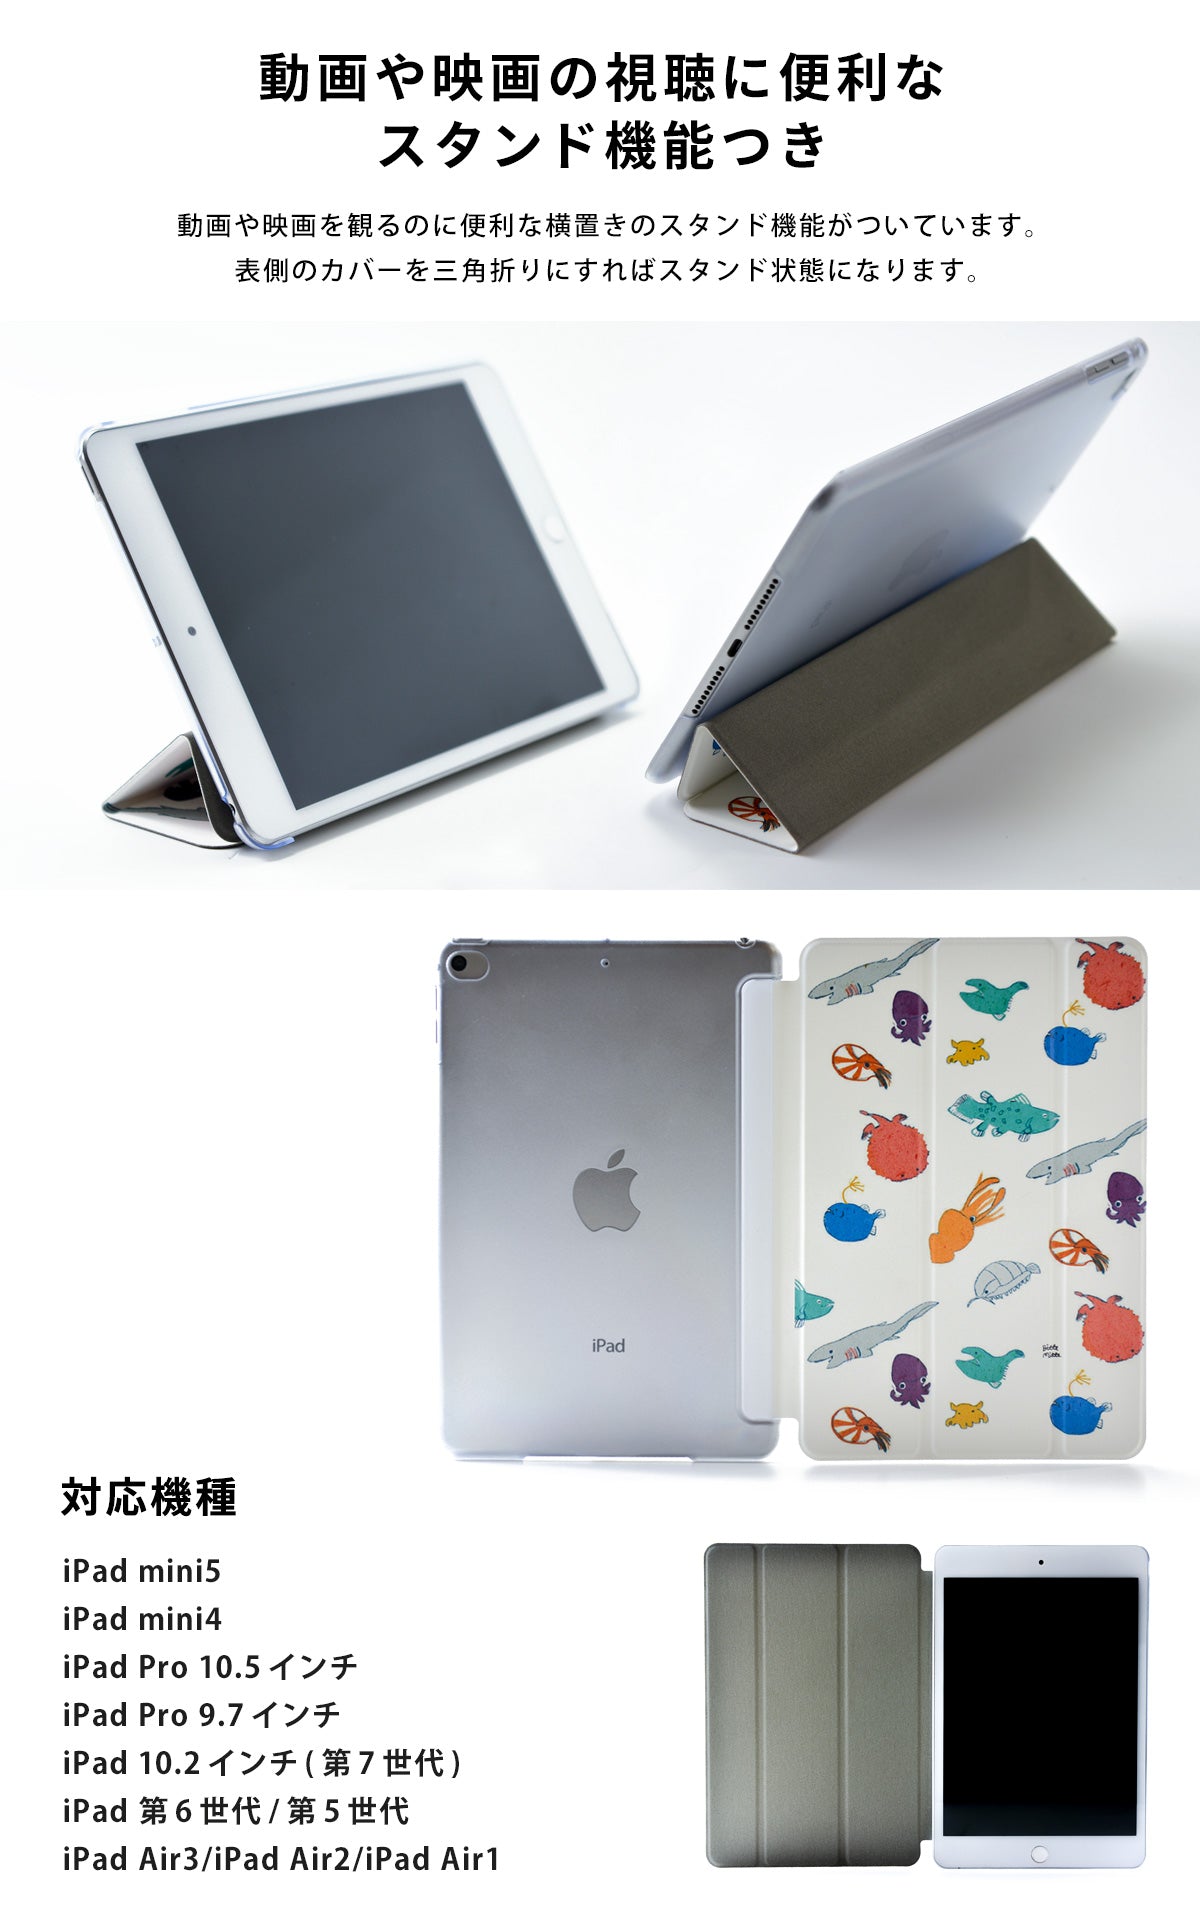 iPadケースはスタンド機能付き。